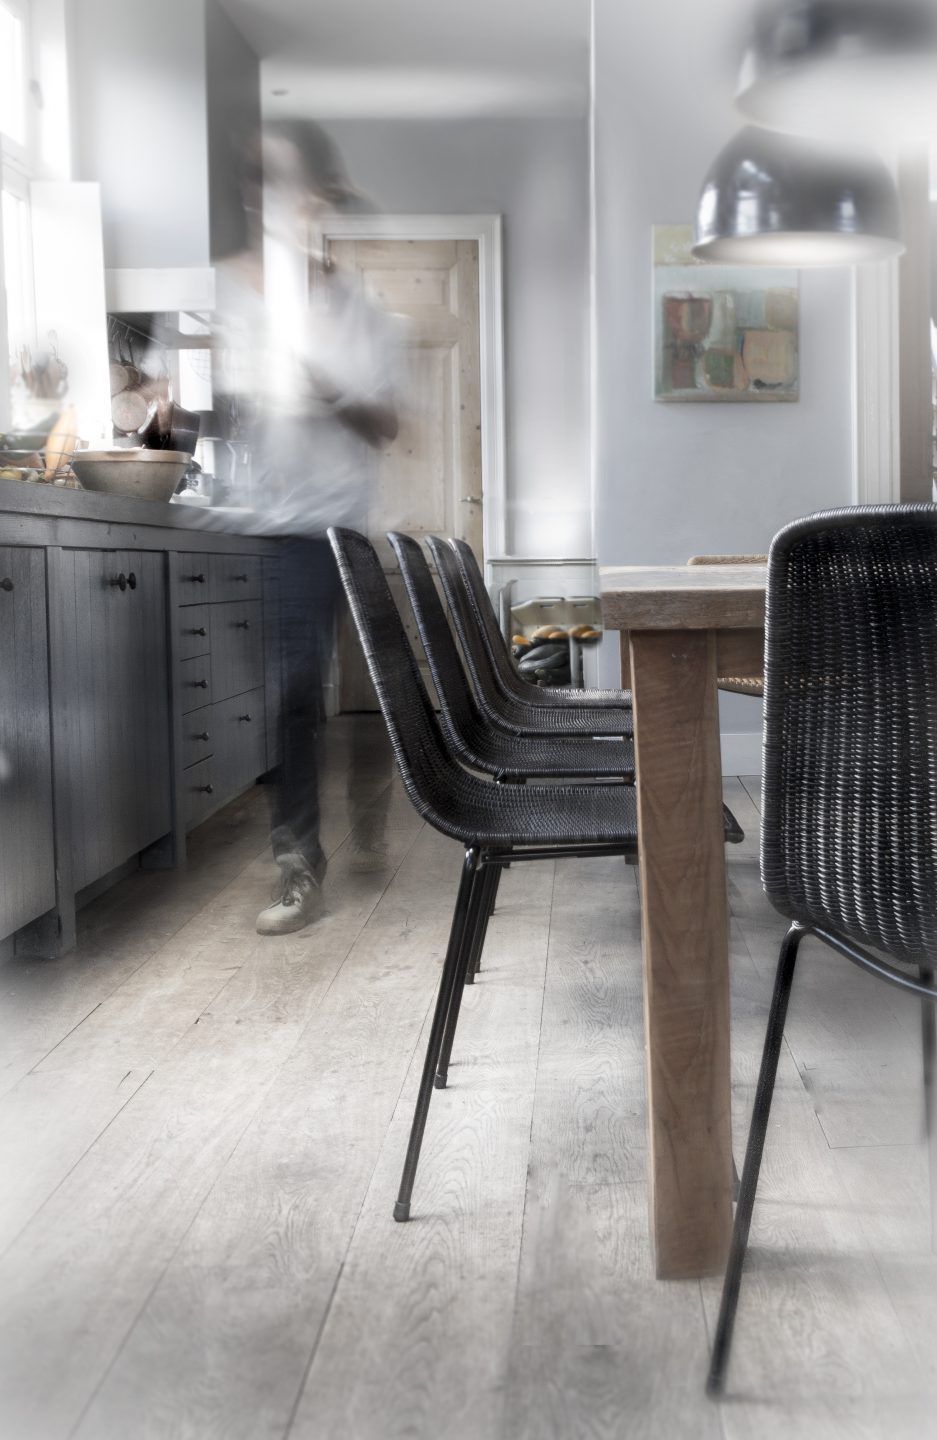 BASKET INDOOR chair by Feelgood Designs